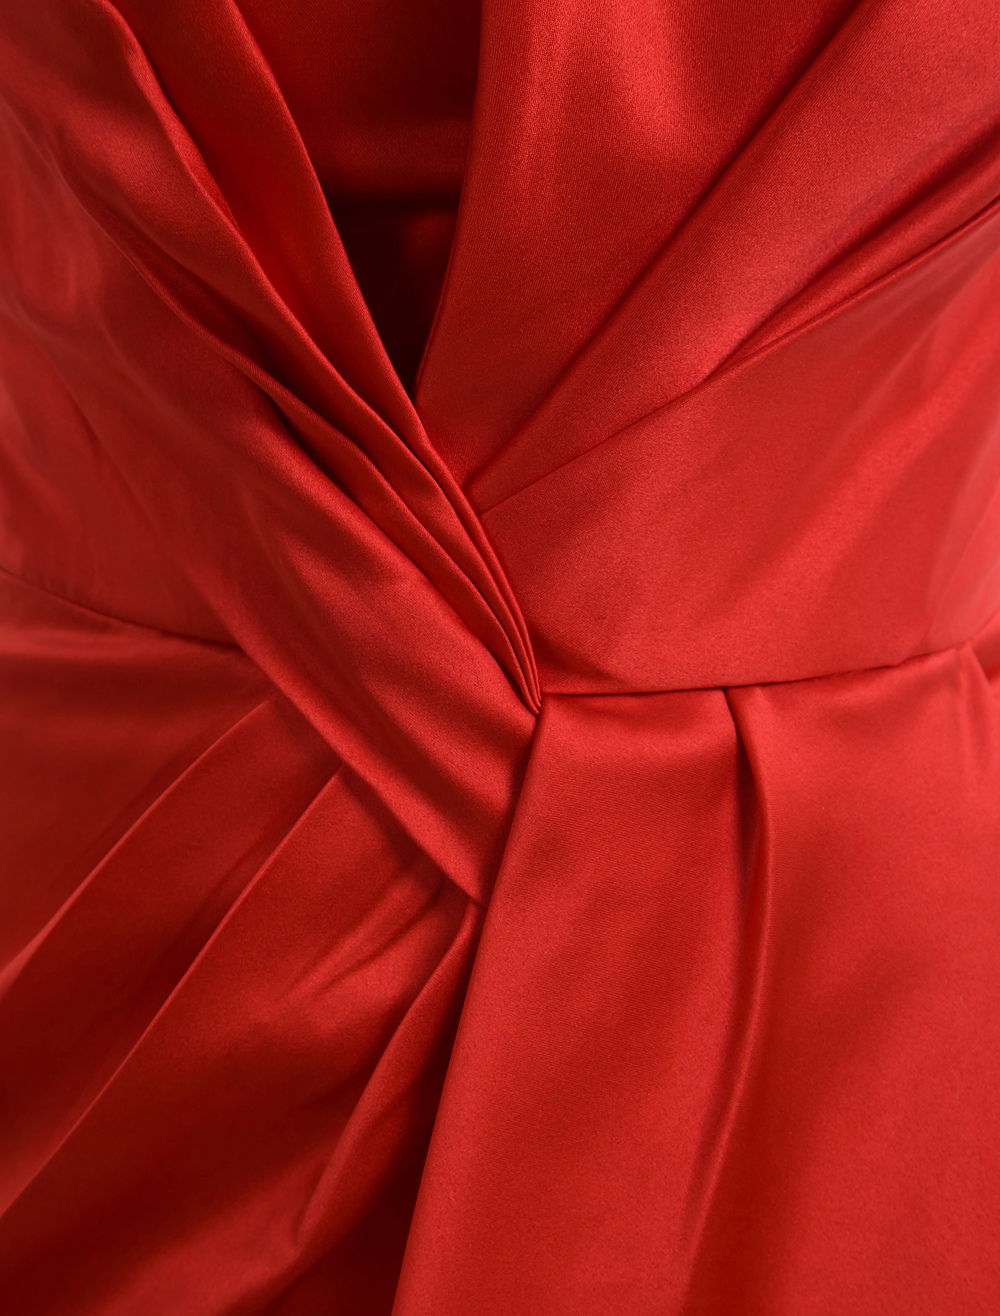 Sheath Strapless Red Satin Pleated Celebrity Dress - Milanoo.com